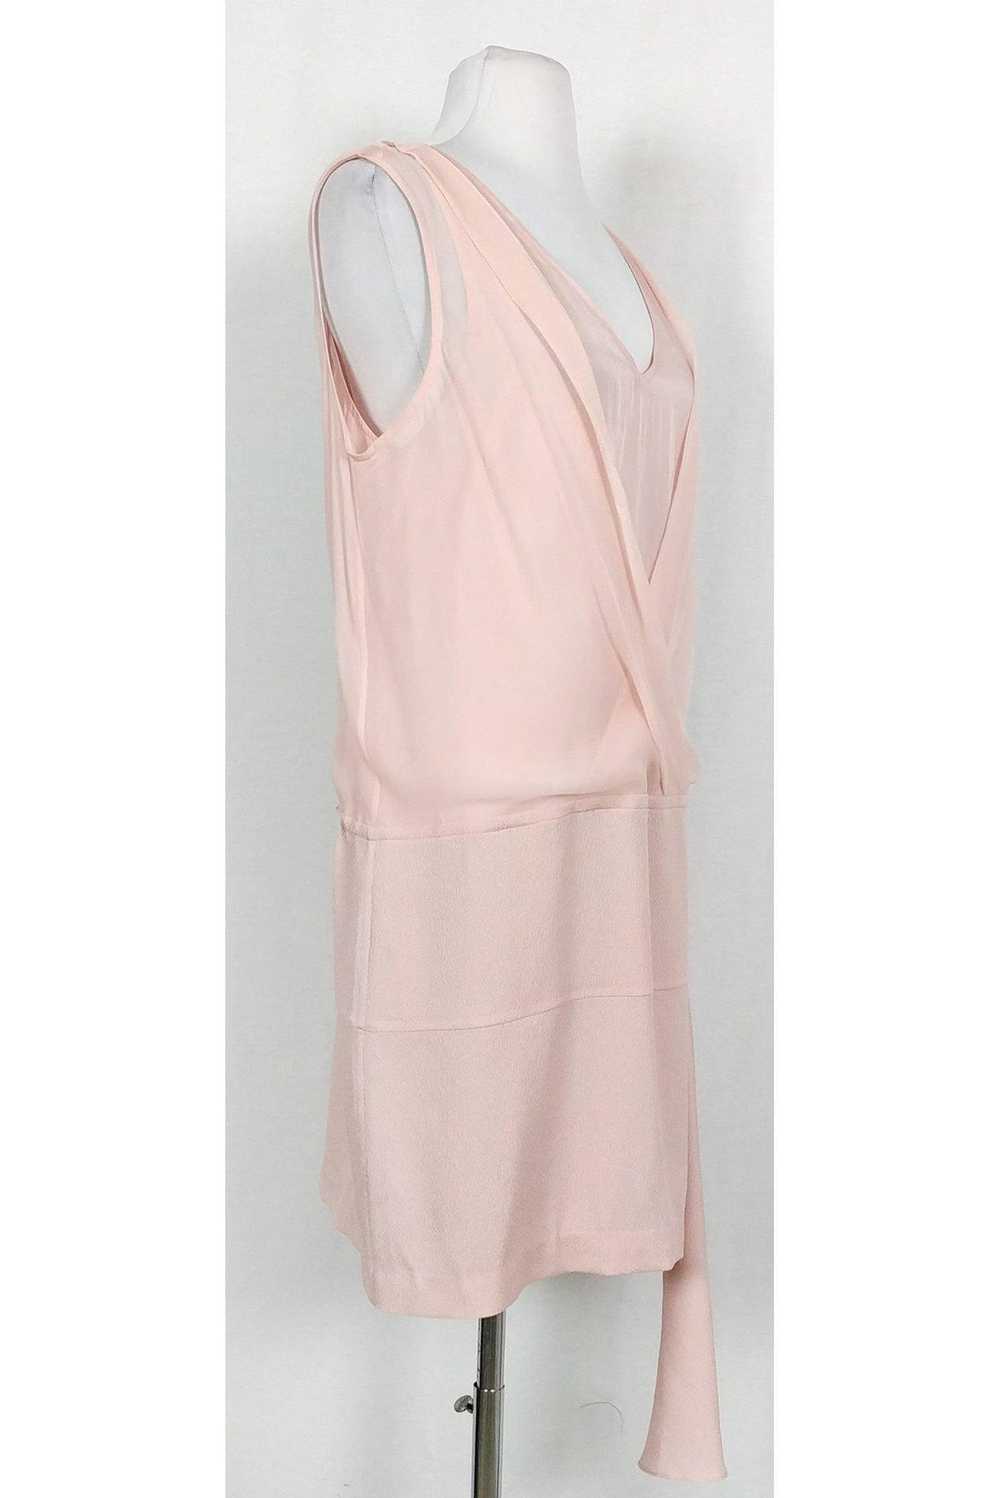 Tracy Reese - Pale Pink Drop Waist Dress Sz M - image 2